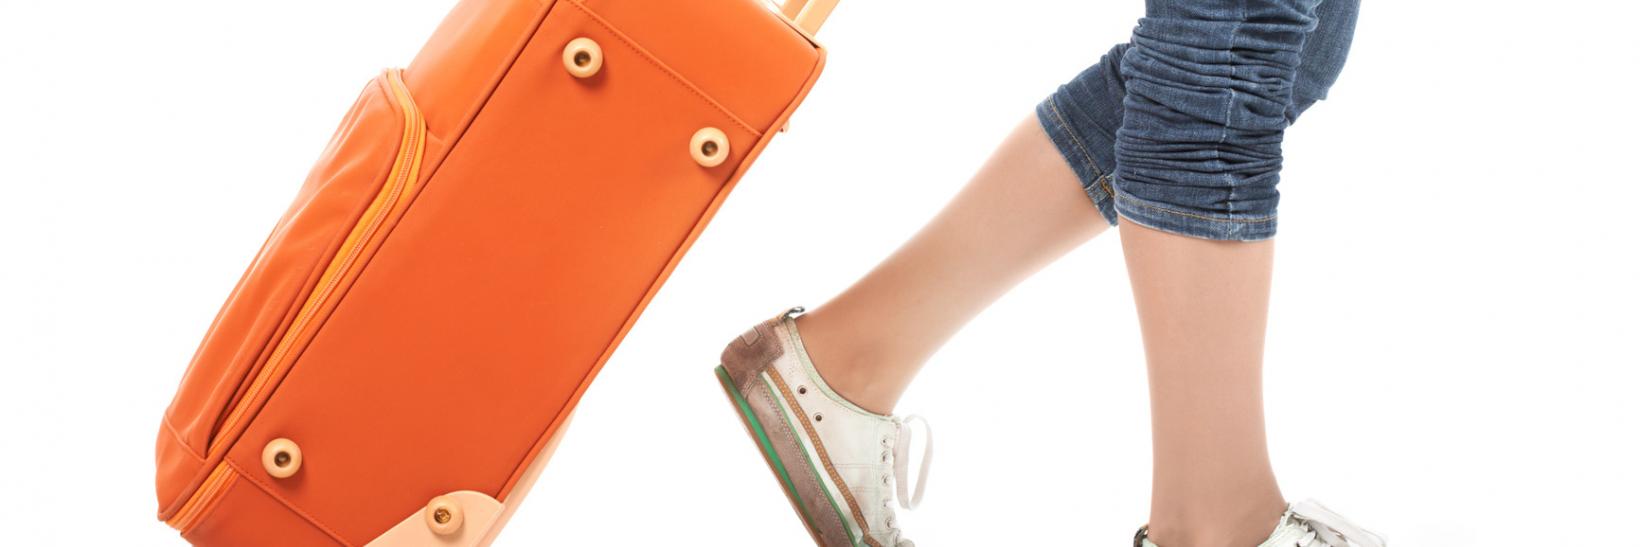 Girl walking with orange suitcase.